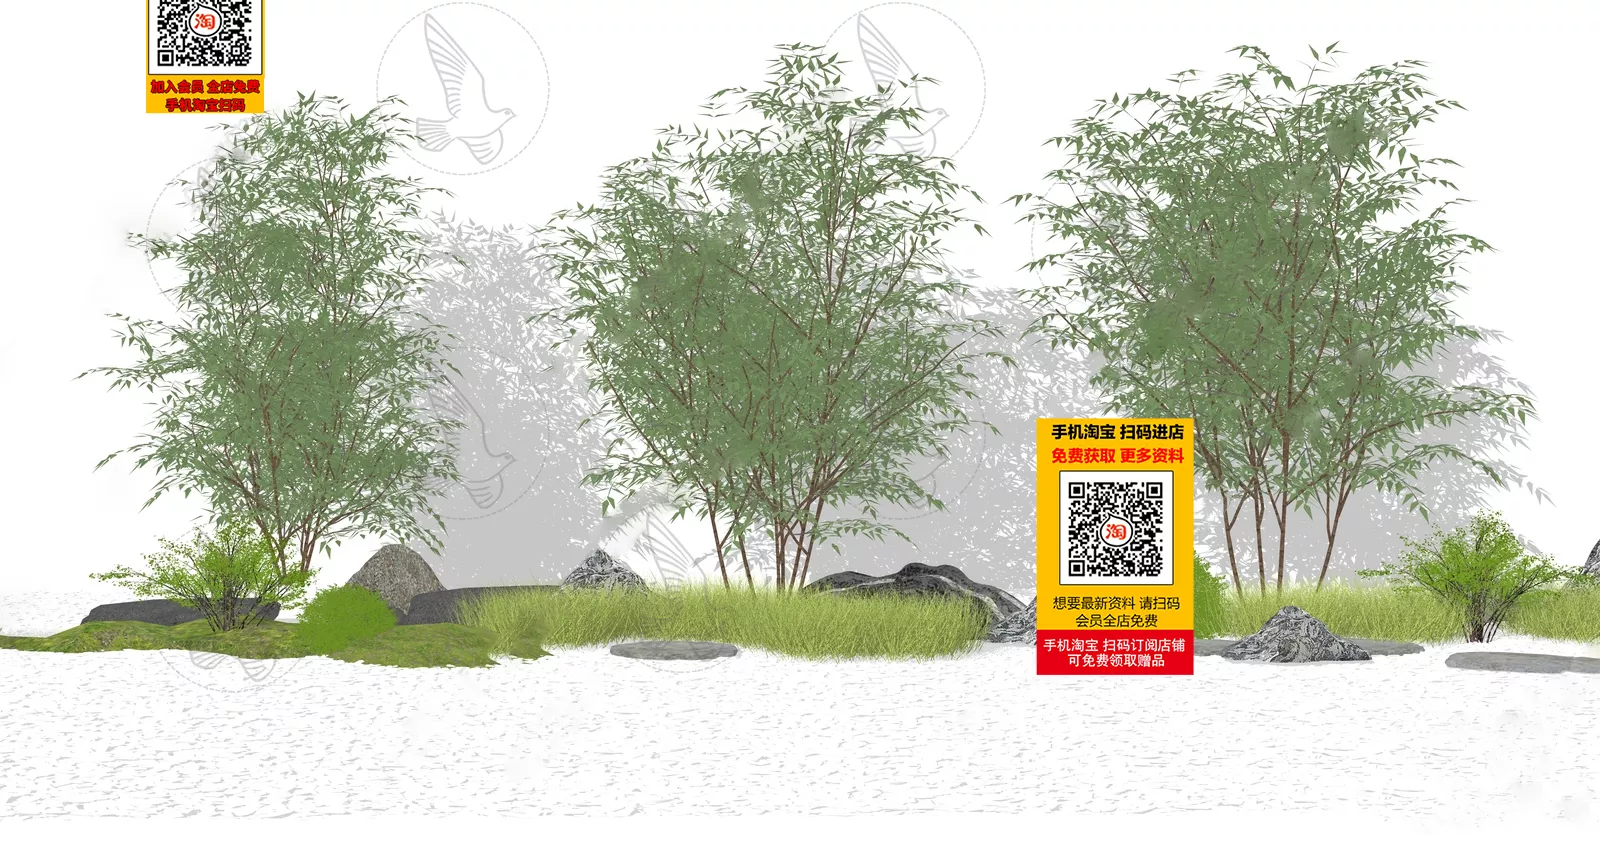 MODERN PLANTS - SKETCHUP 3D MODEL - VRAY OR ENSCAPE - ID12102